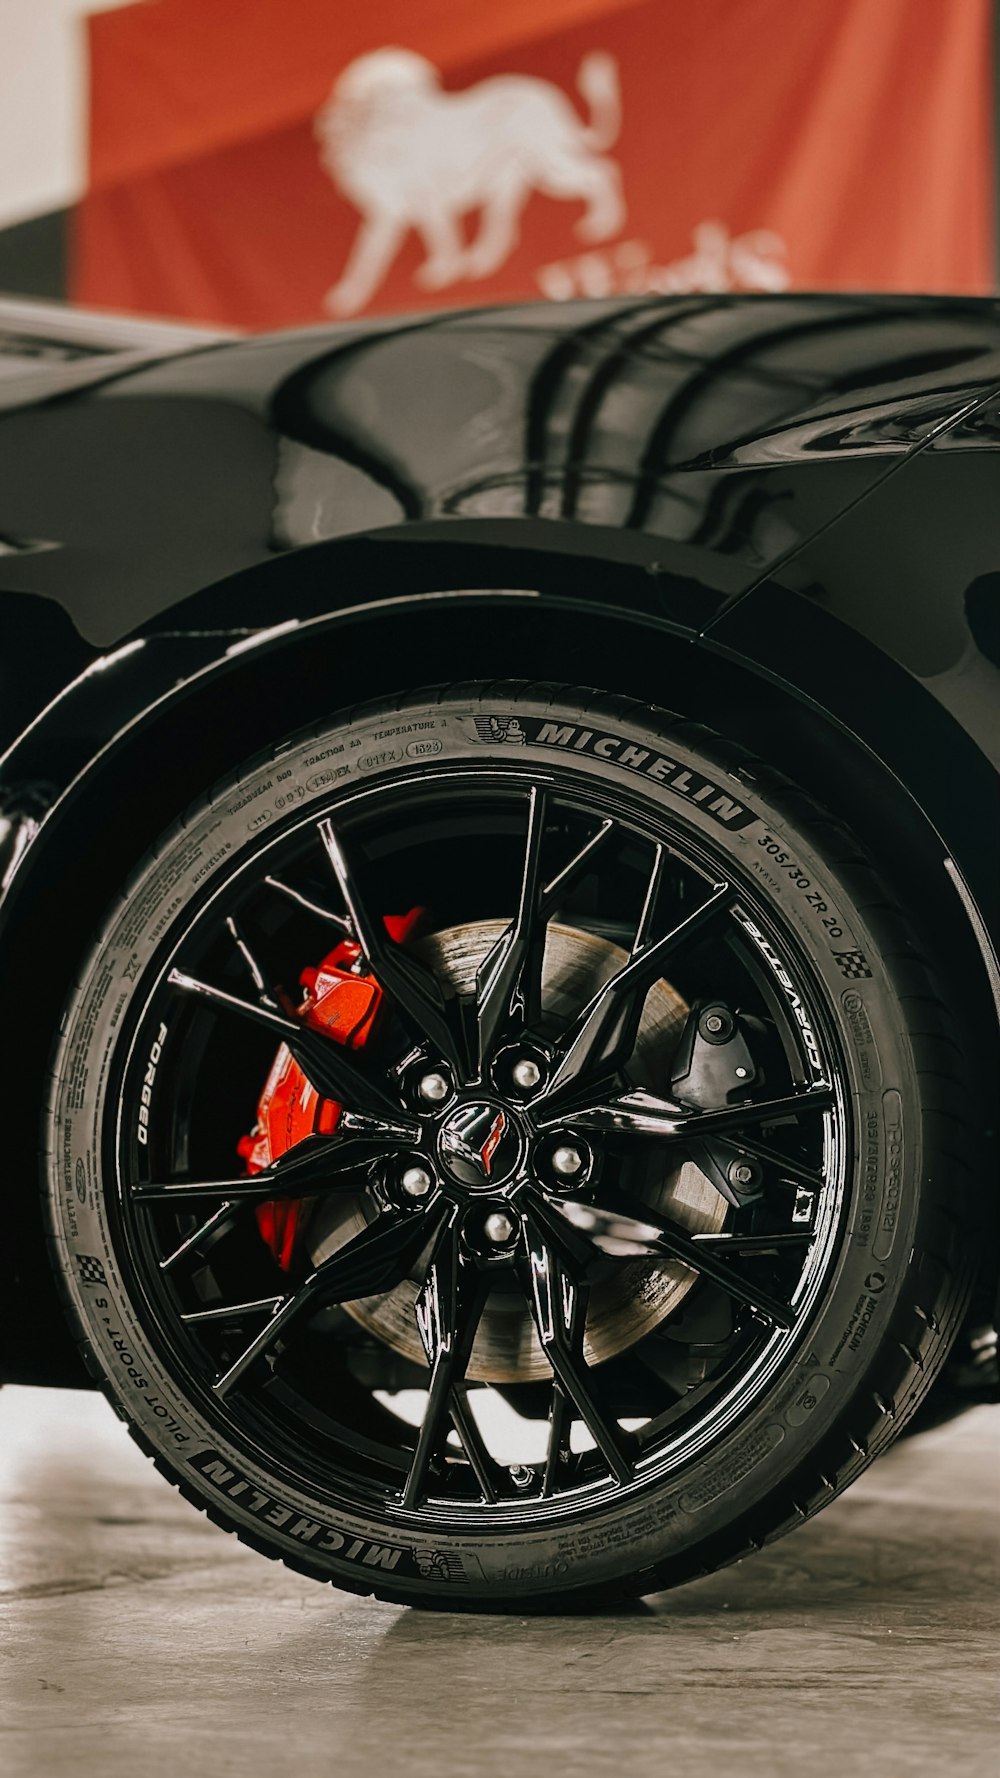 a close up of a black sports car tire